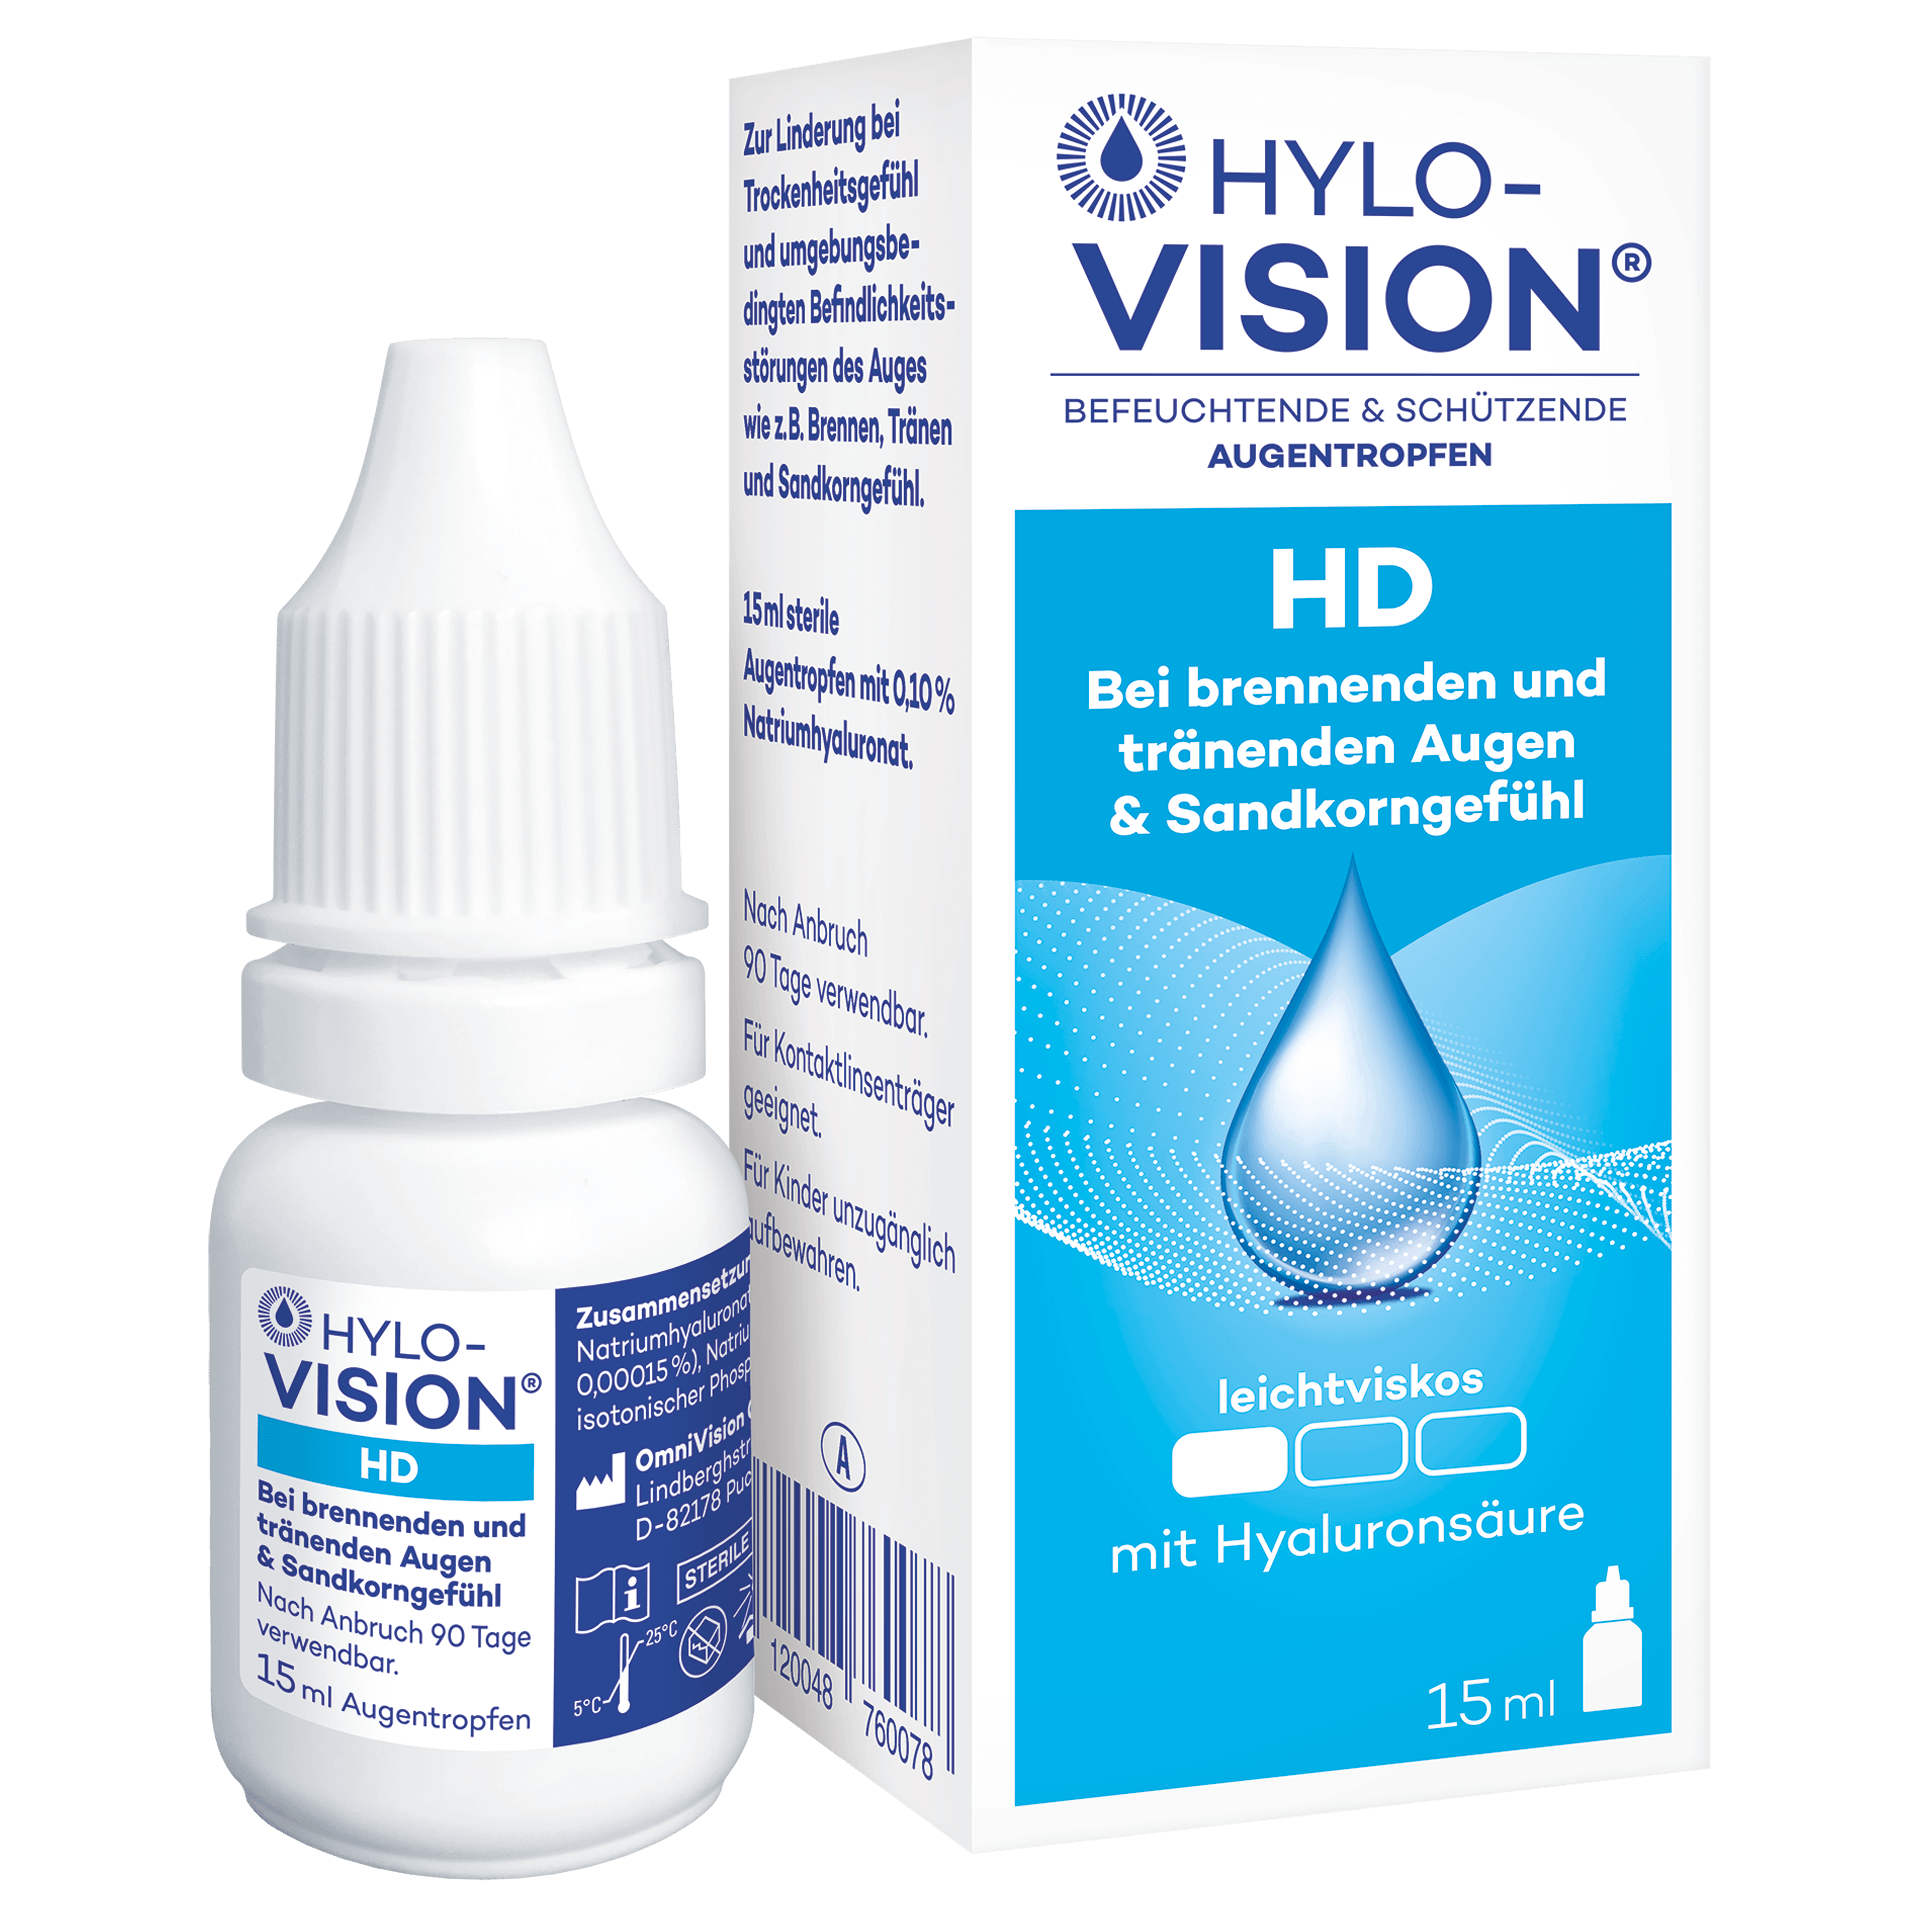 Hylo-Vision HD pack shot